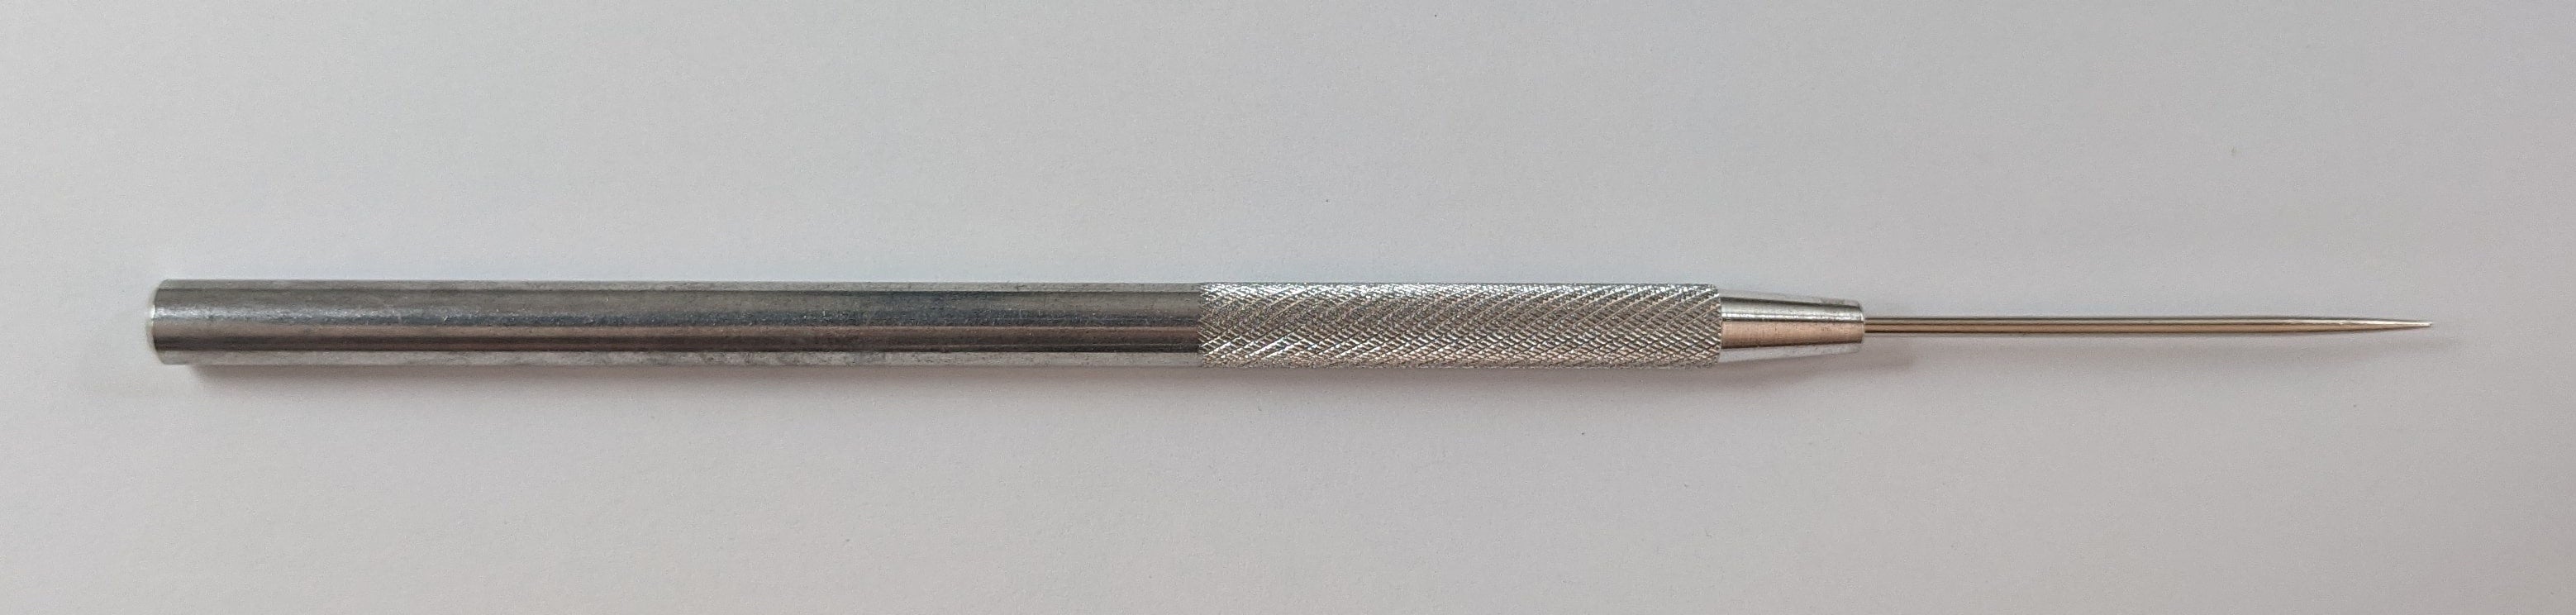 Kemper Tools Professional Needle Tool,Silver (PRO)